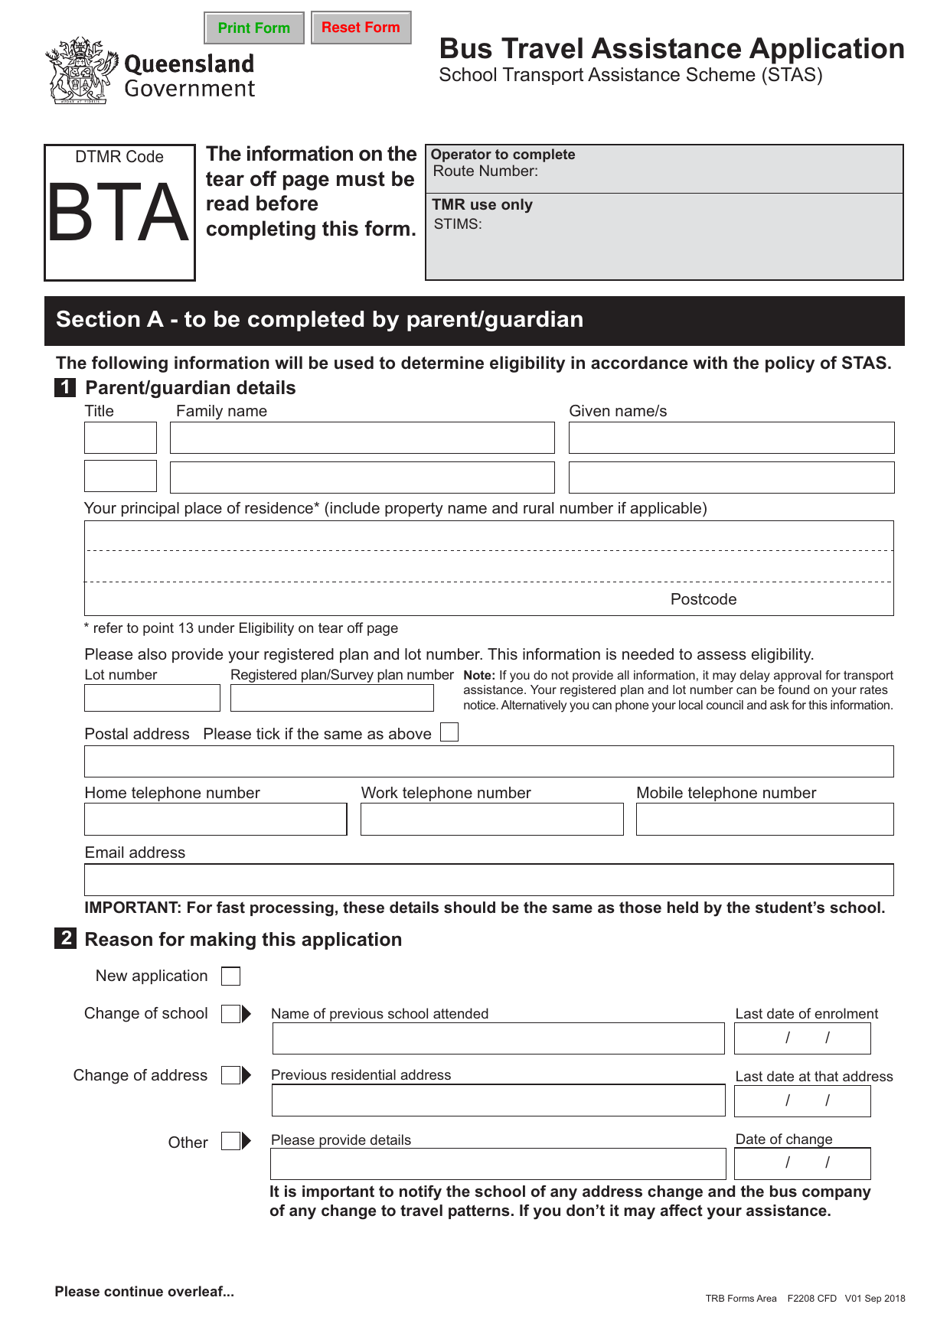 Form F2208 Bus Travel Assistance Application - Queensland, Australia, Page 1